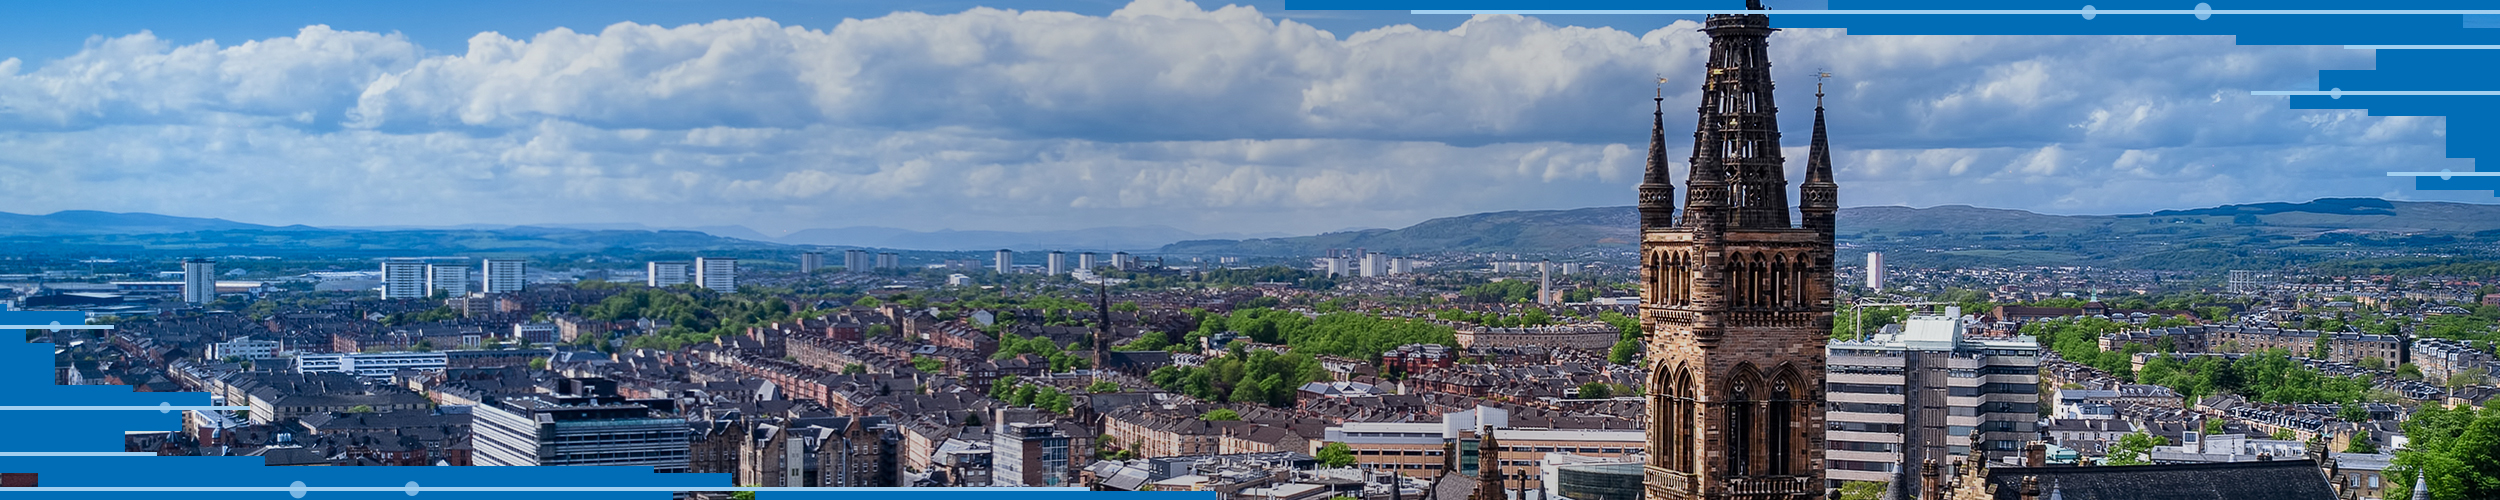  A photograph of Glasgow, Scotland